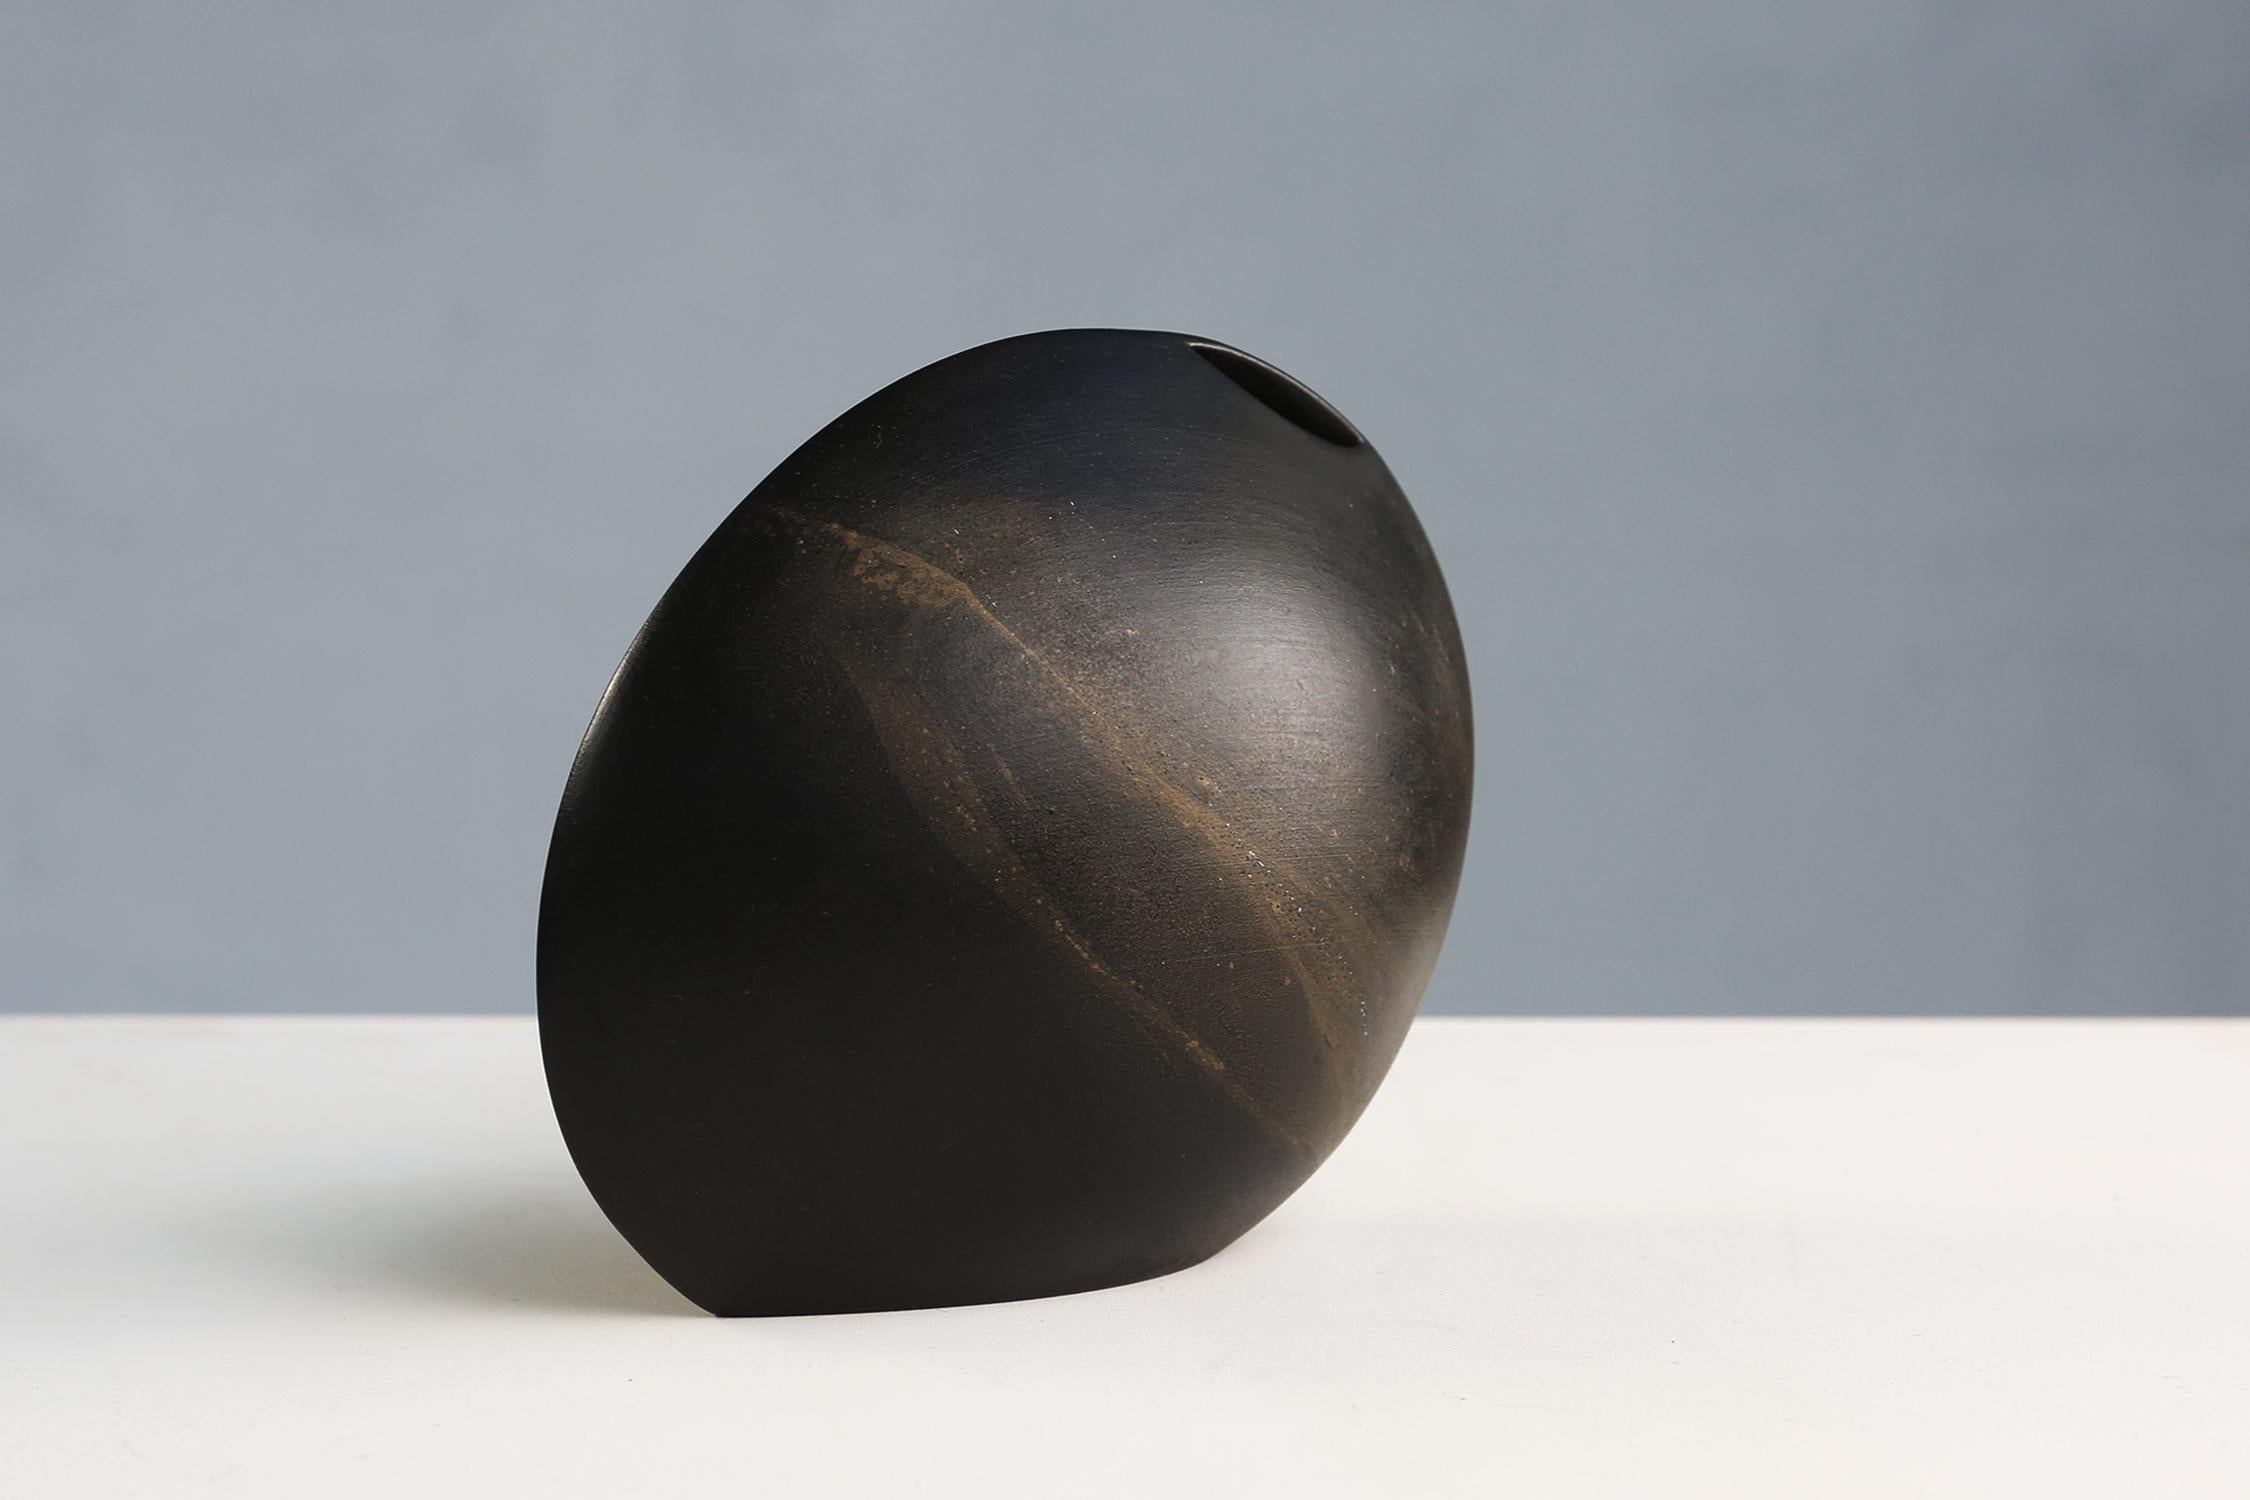 Black ceramic oval vase made around 1960.